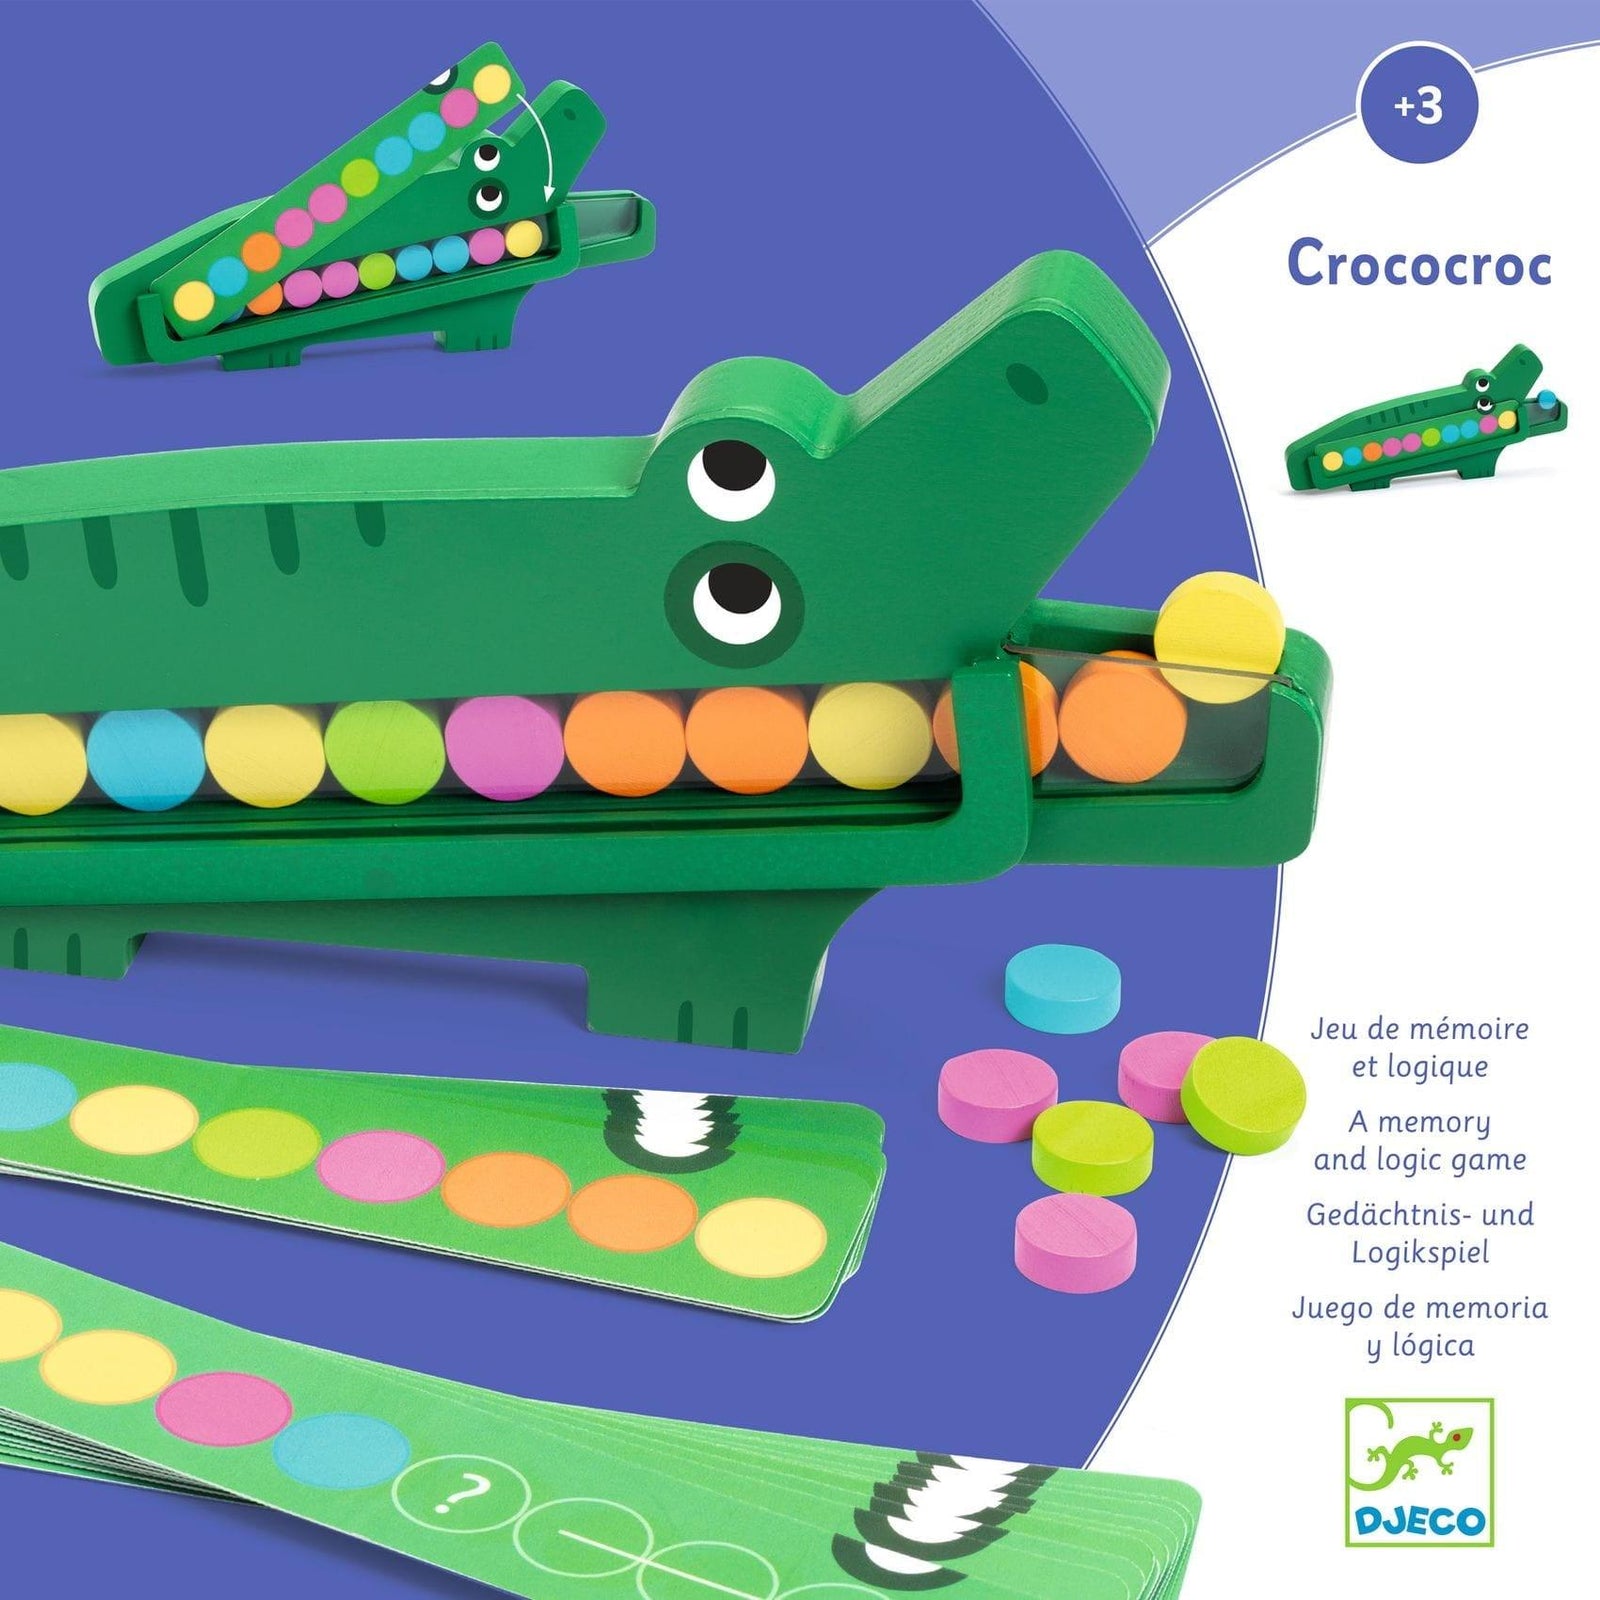 Djeco: Crococroc wooden crocodile educational game